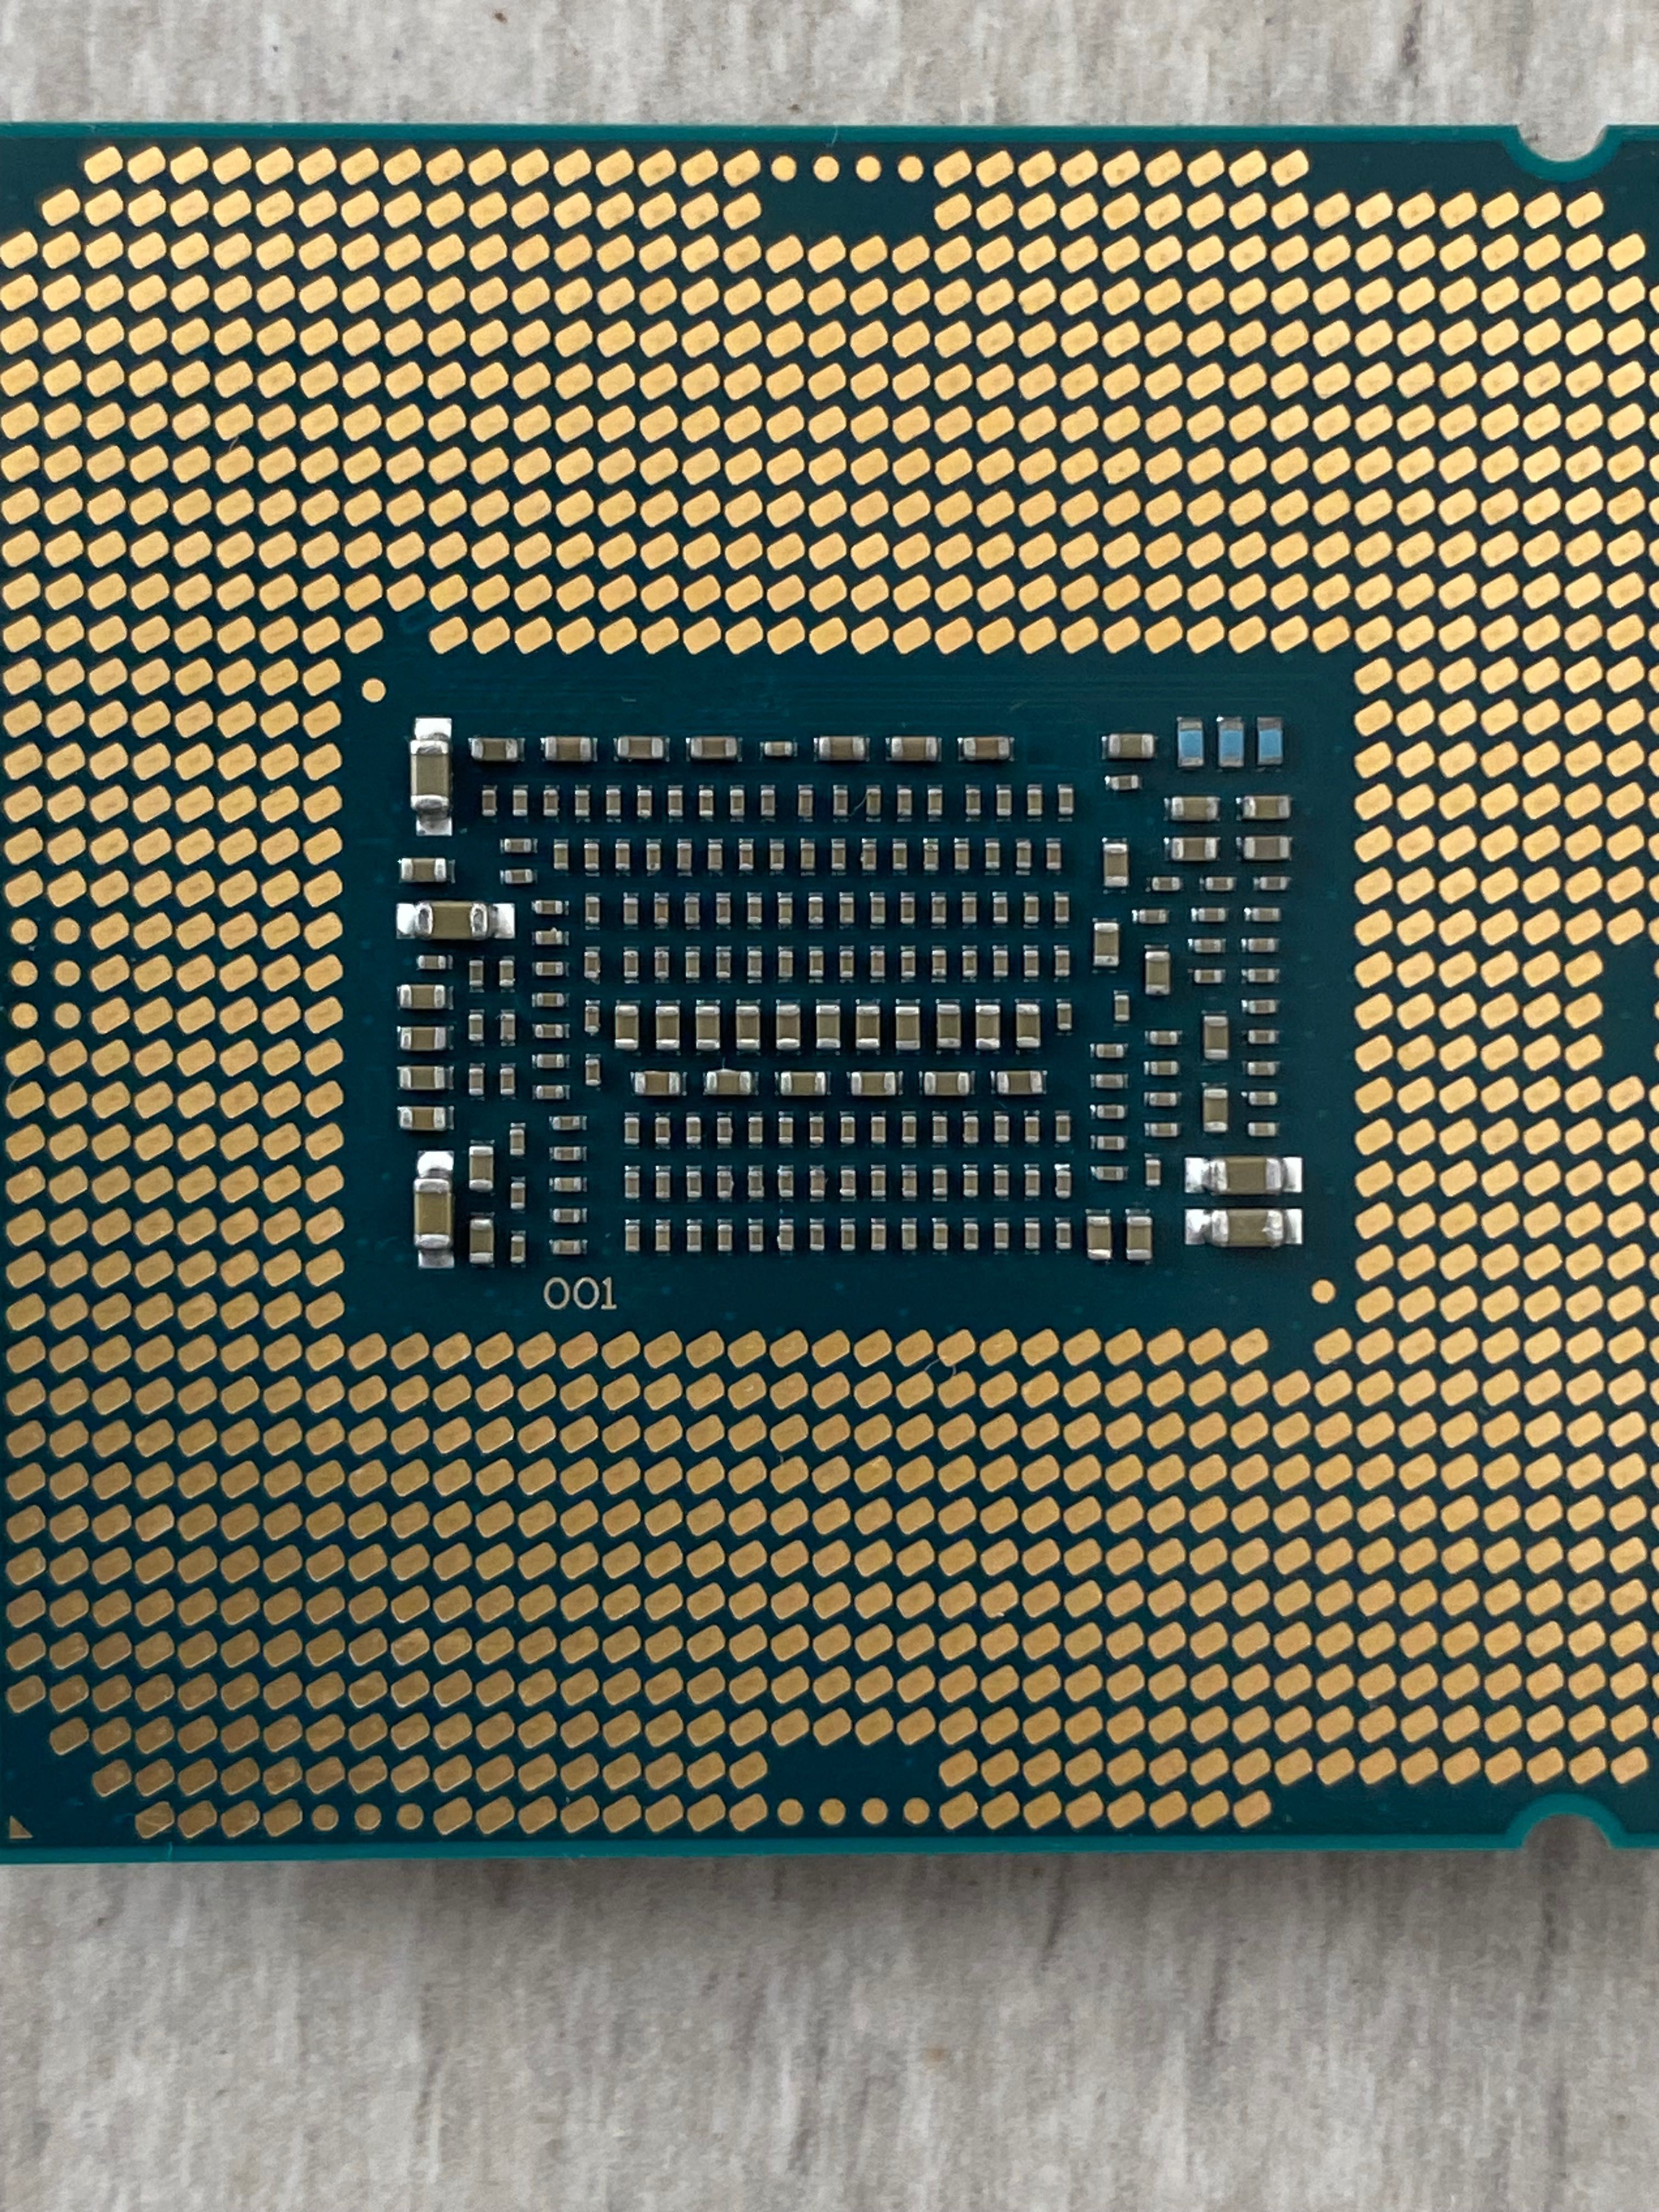 Procesor intel i5 9400f  + aqirys puck